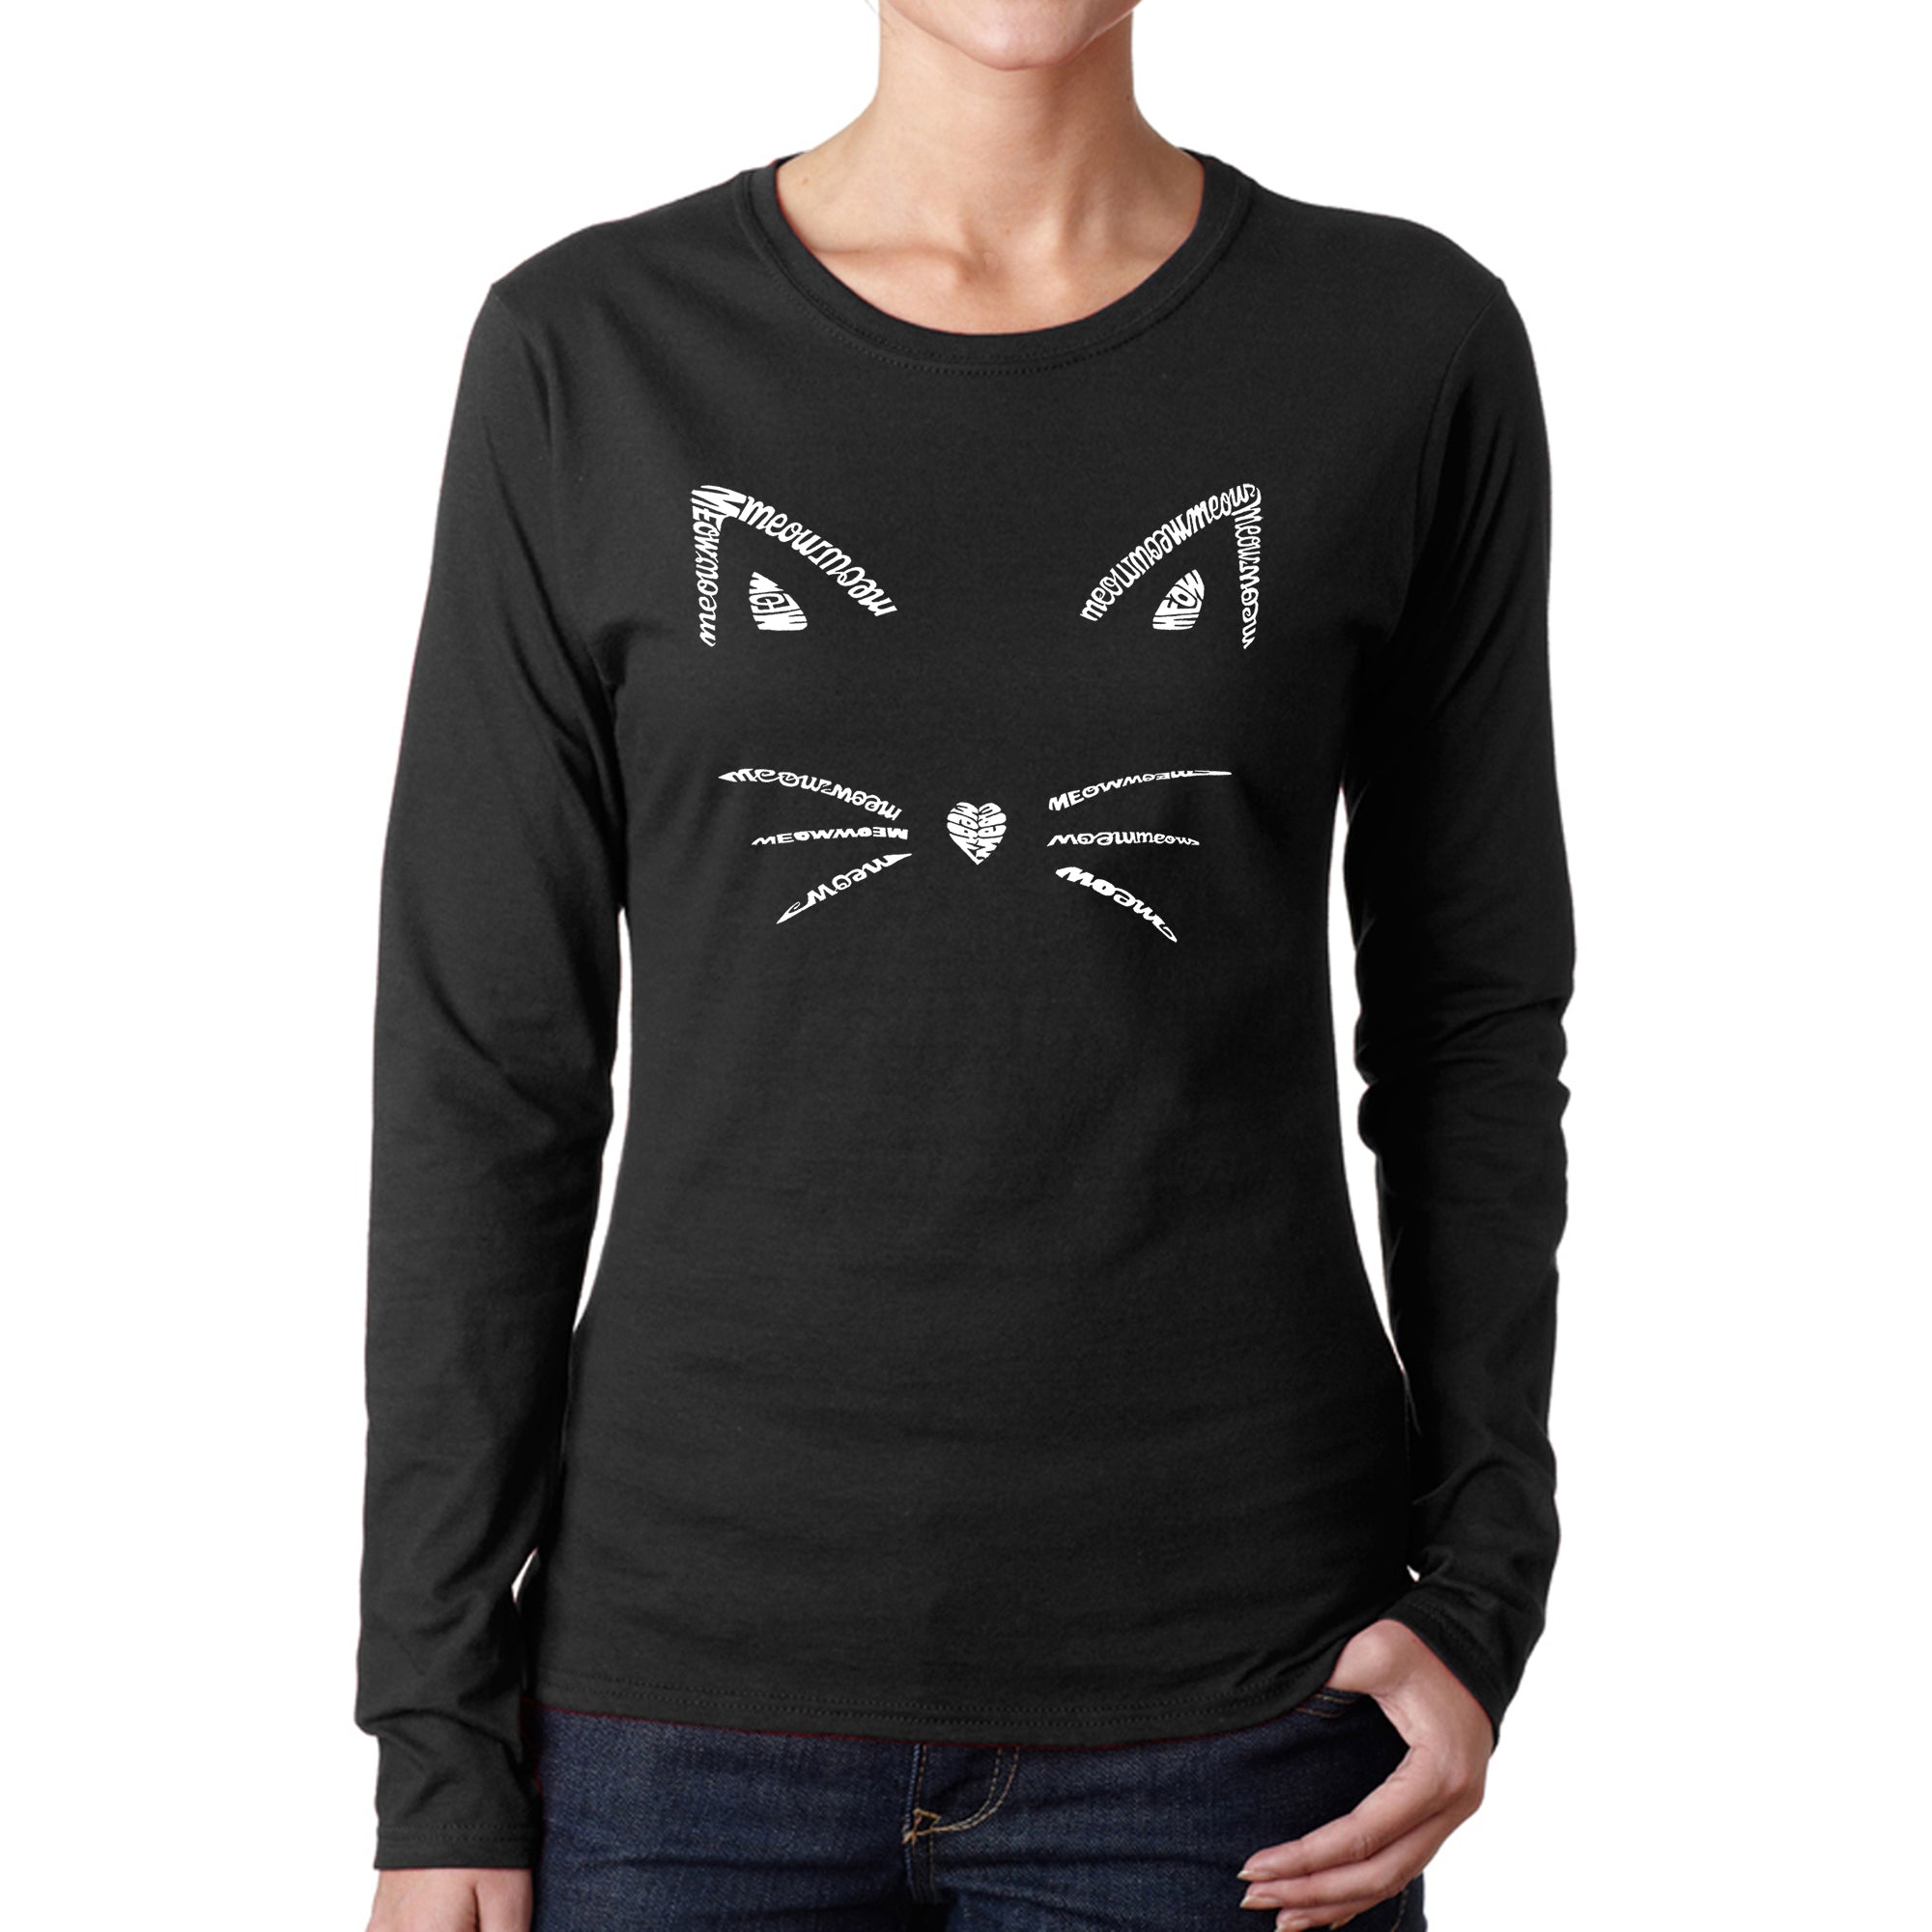 Whiskers - Women's Word Art Long Sleeve T-Shirt - Black - Small